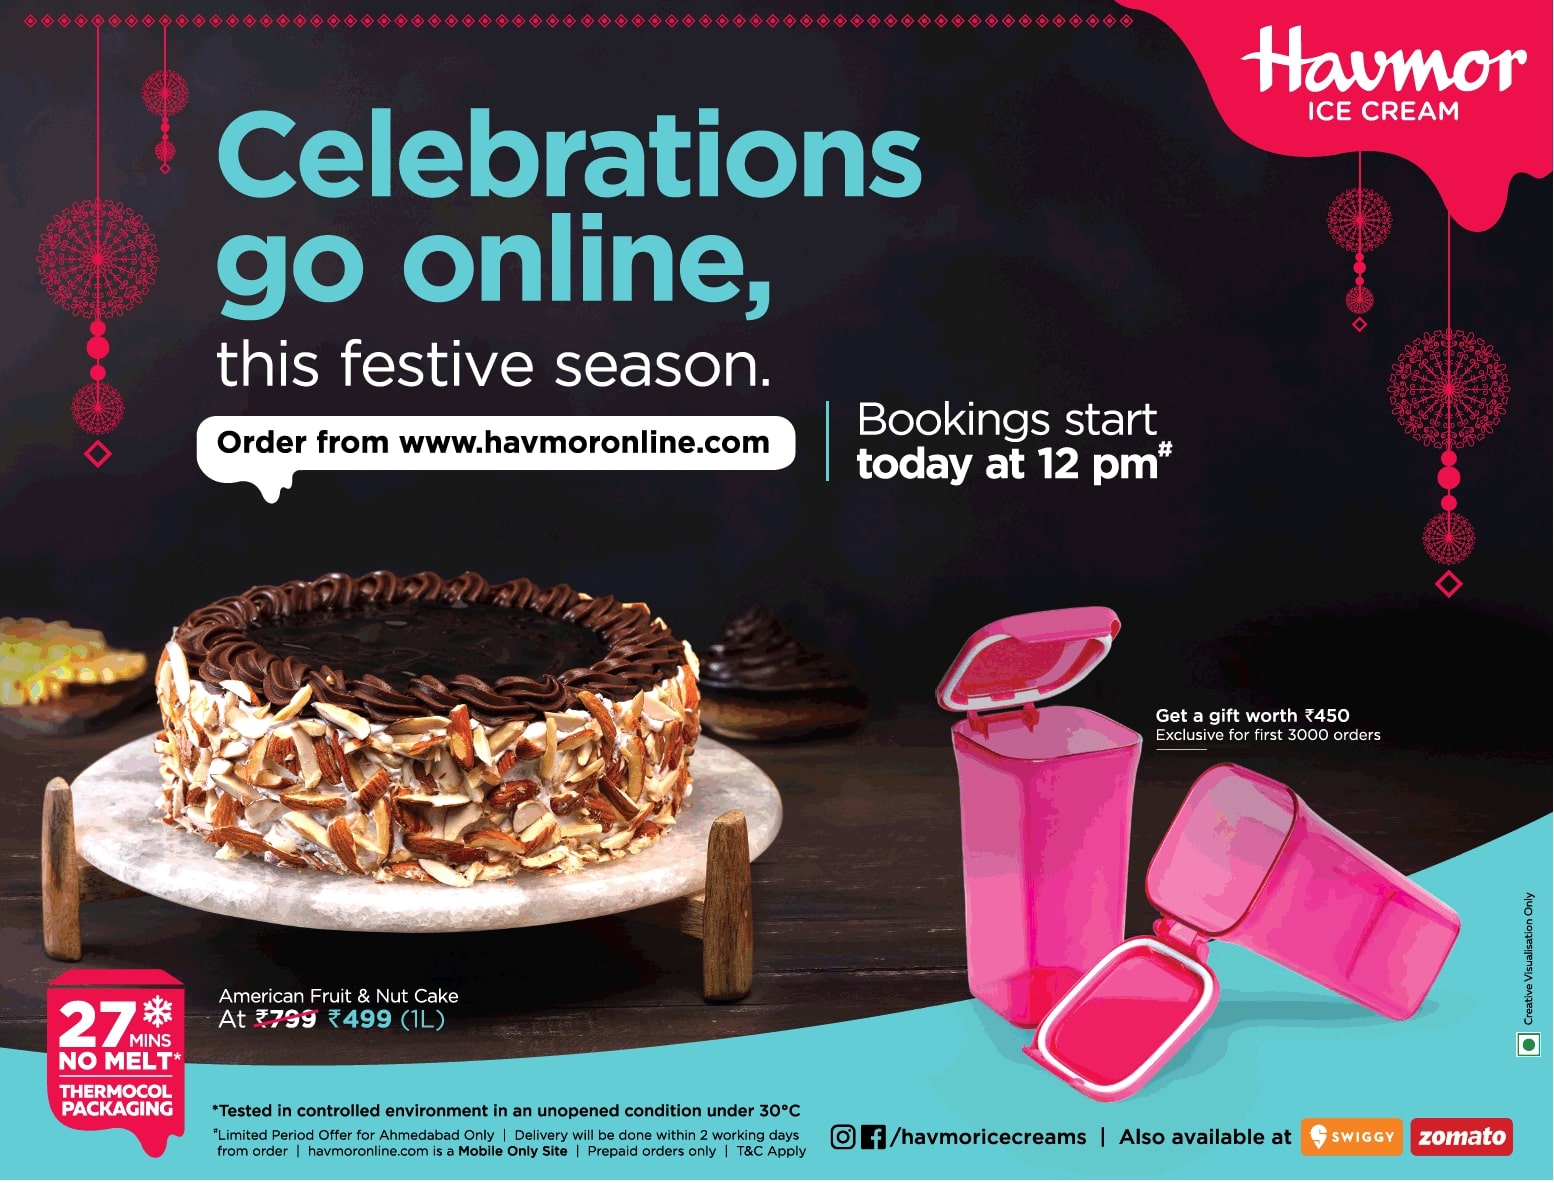 havmor-ice-cream-celebrations-go-online-this-festive-season-order-from-www-havmoronline-com-ad-toi-ahmedabad-11-11-2020